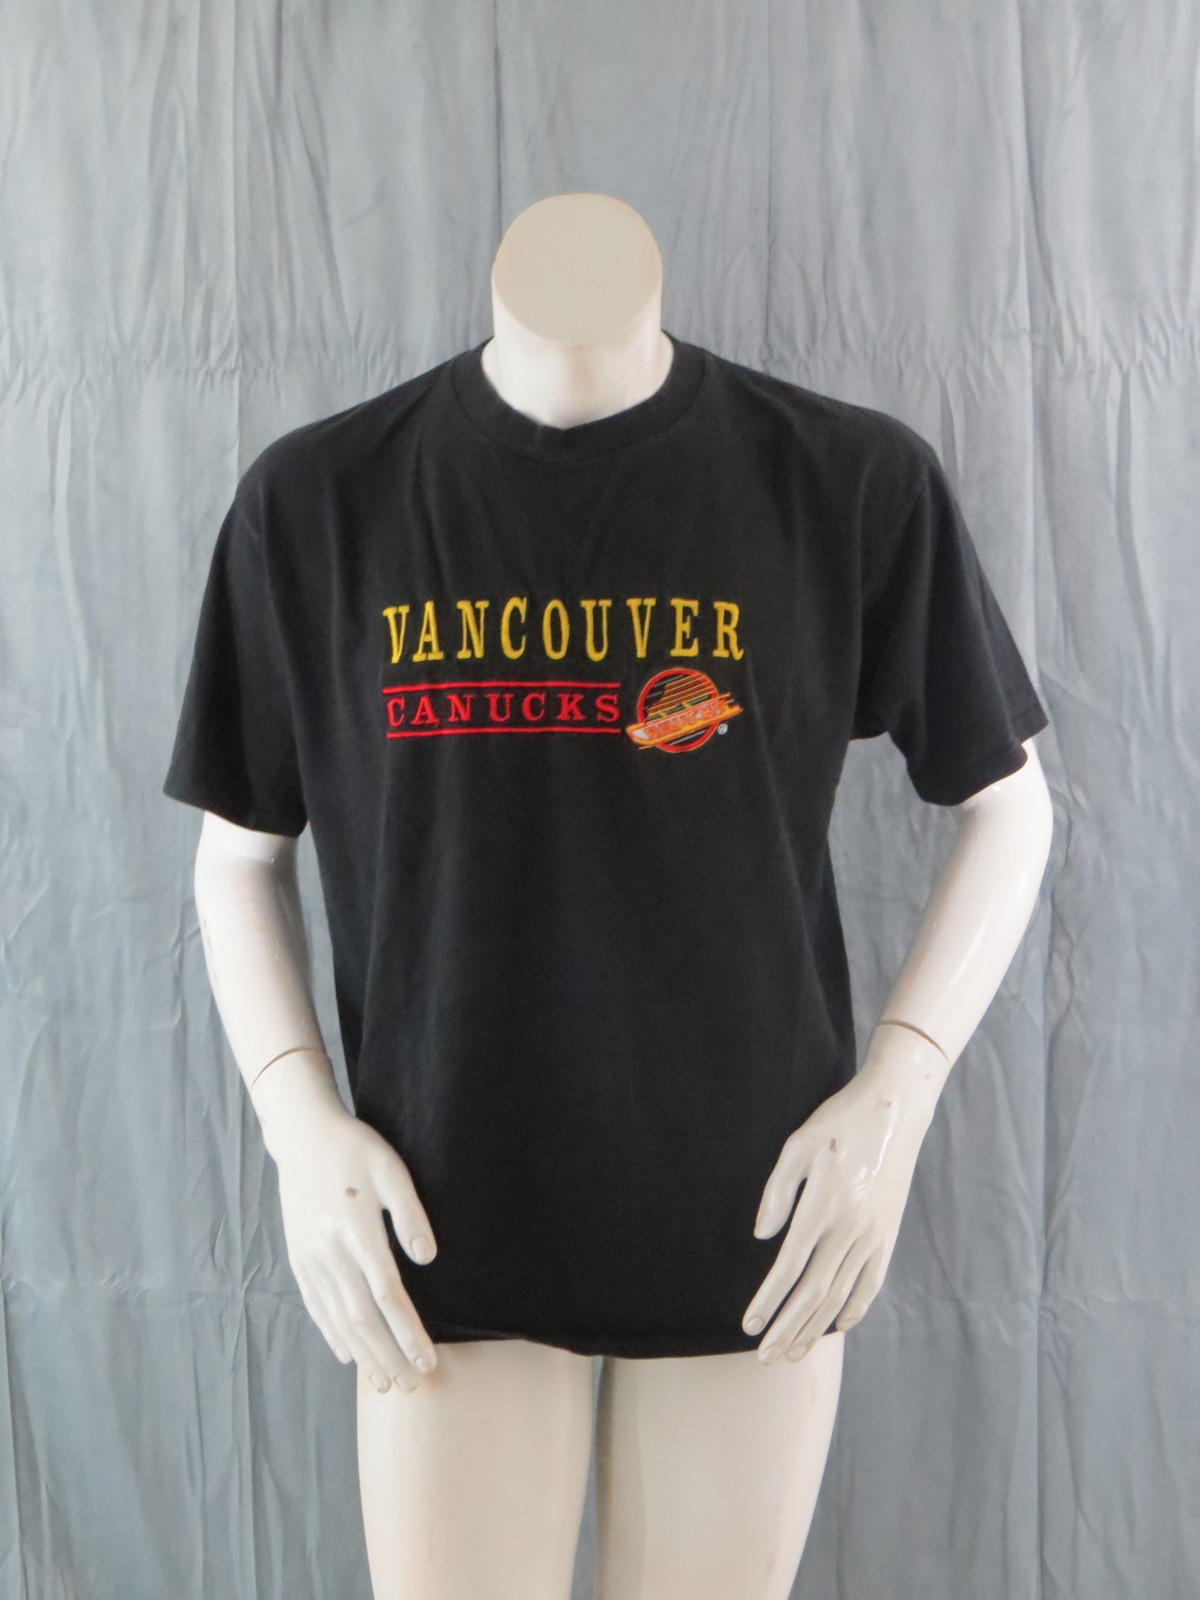 Primary image for Vancouver Canucks Shirt (VTG) - Stitched Speeding Skate Graphic - Men's XL